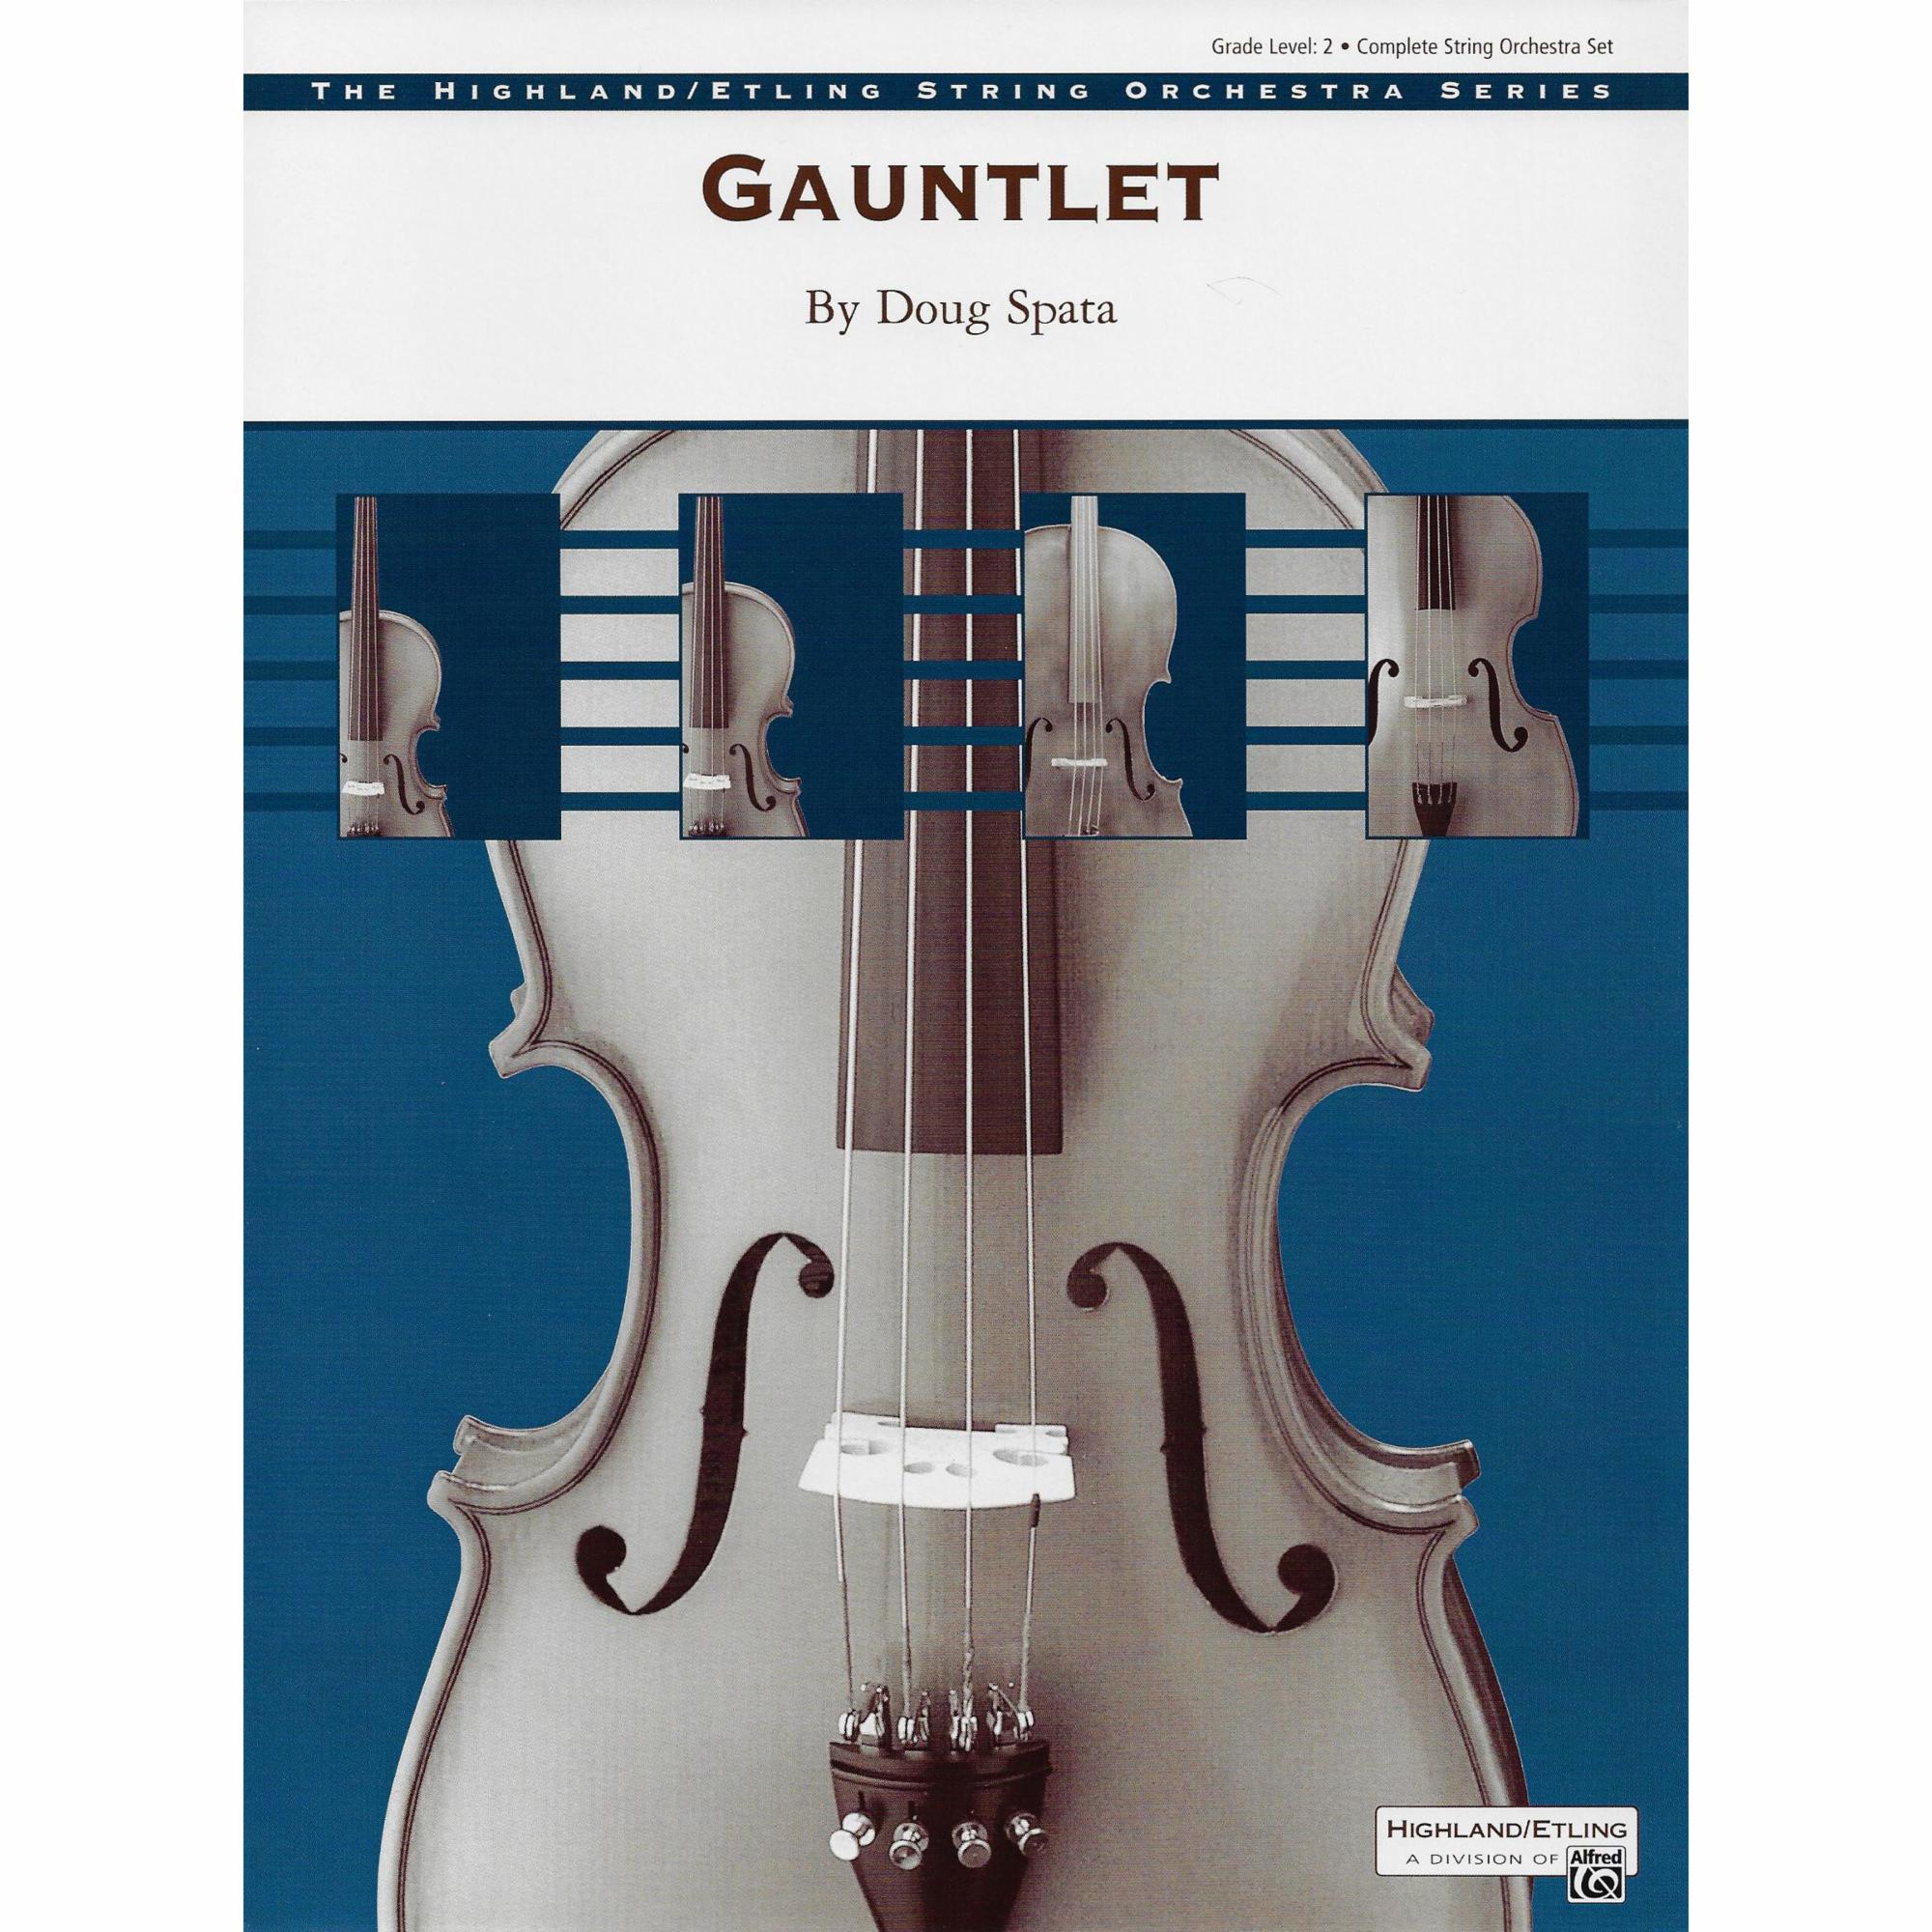 Gauntlet for String Orchestra